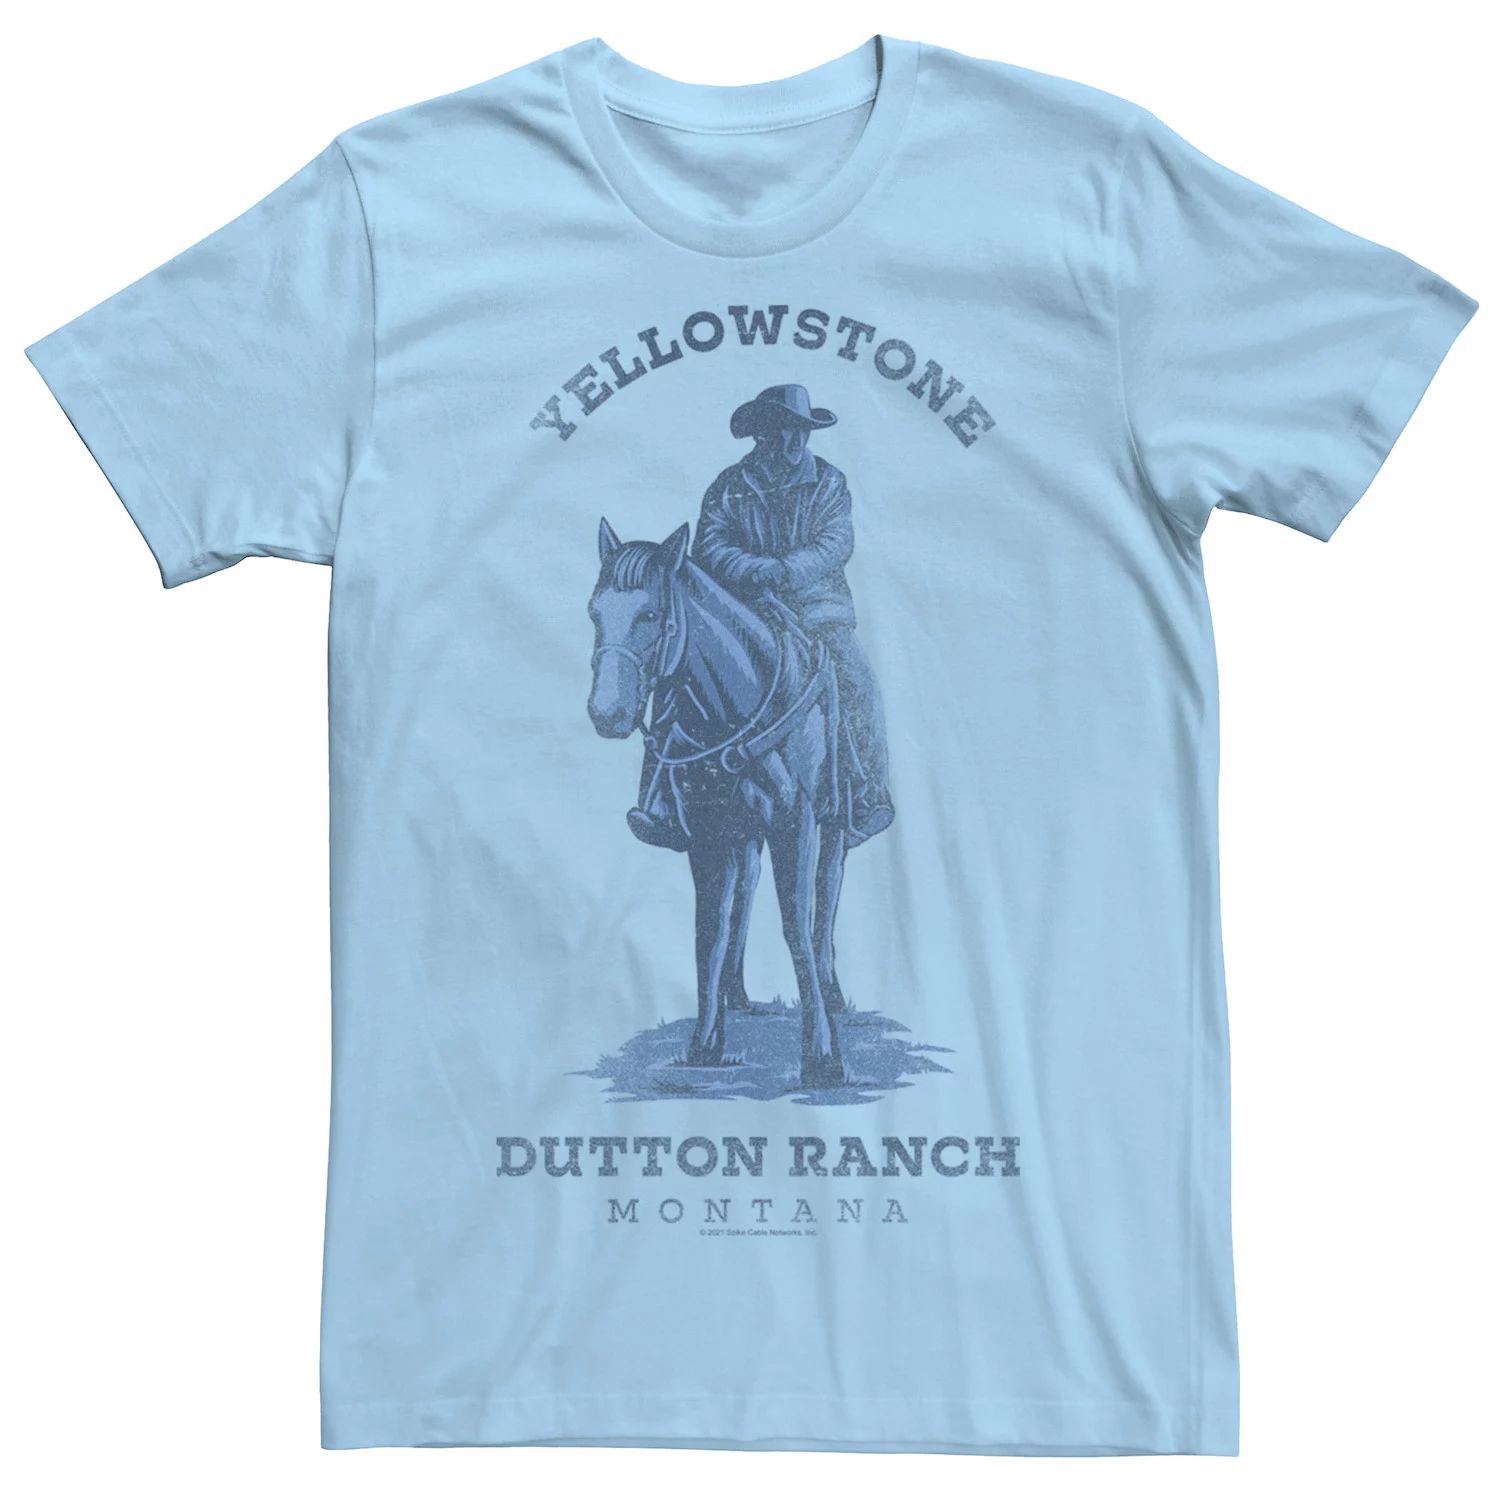 Мужская футболка с логотипом Yellowstone Dutton Ranch Montana John Dutton Licensed Character